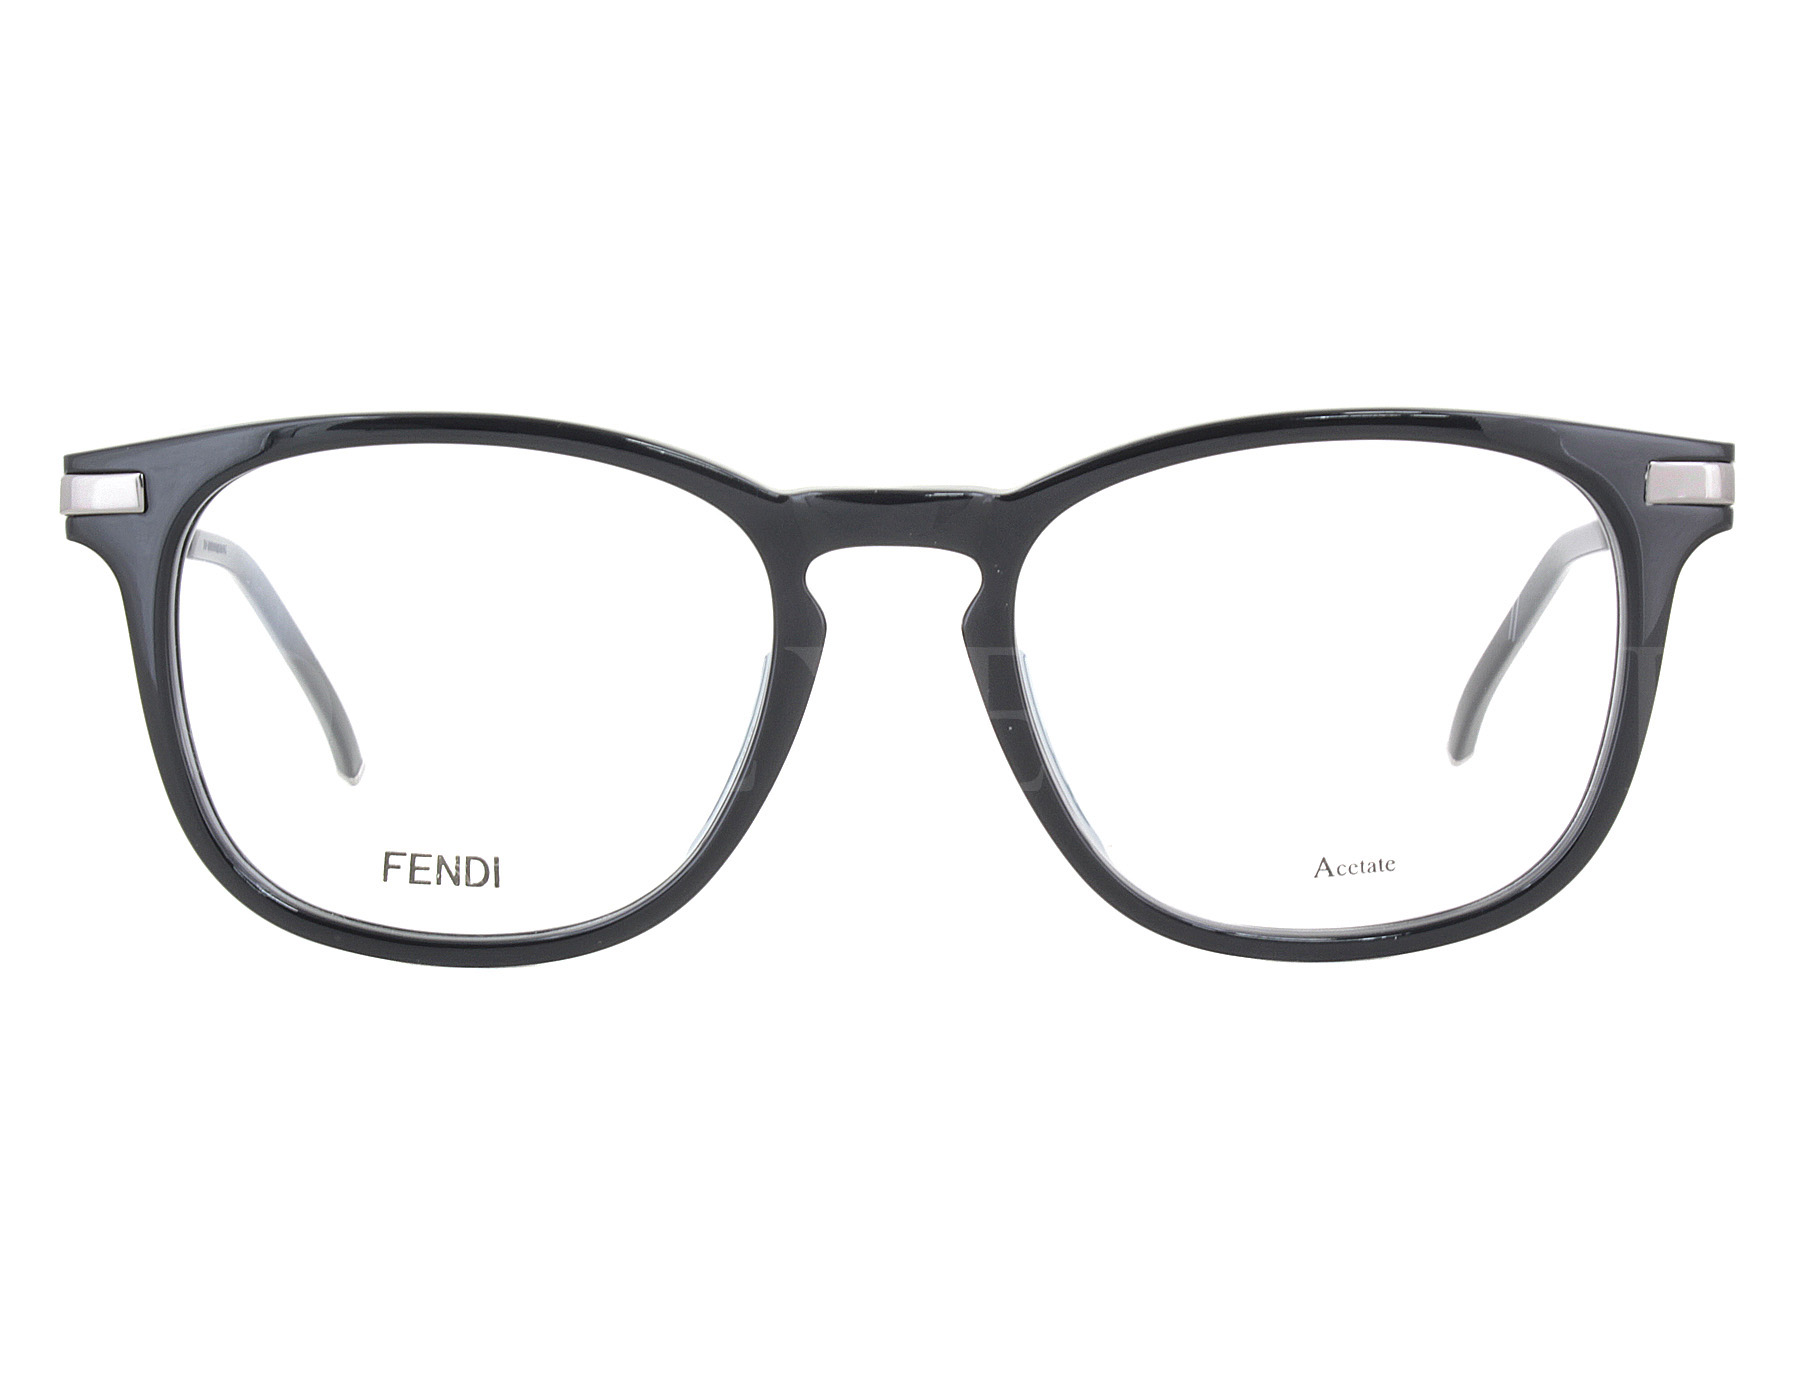 NEW Fendi FF0226 80719 53mm Black Optical Eyeglasses Frames | eBay